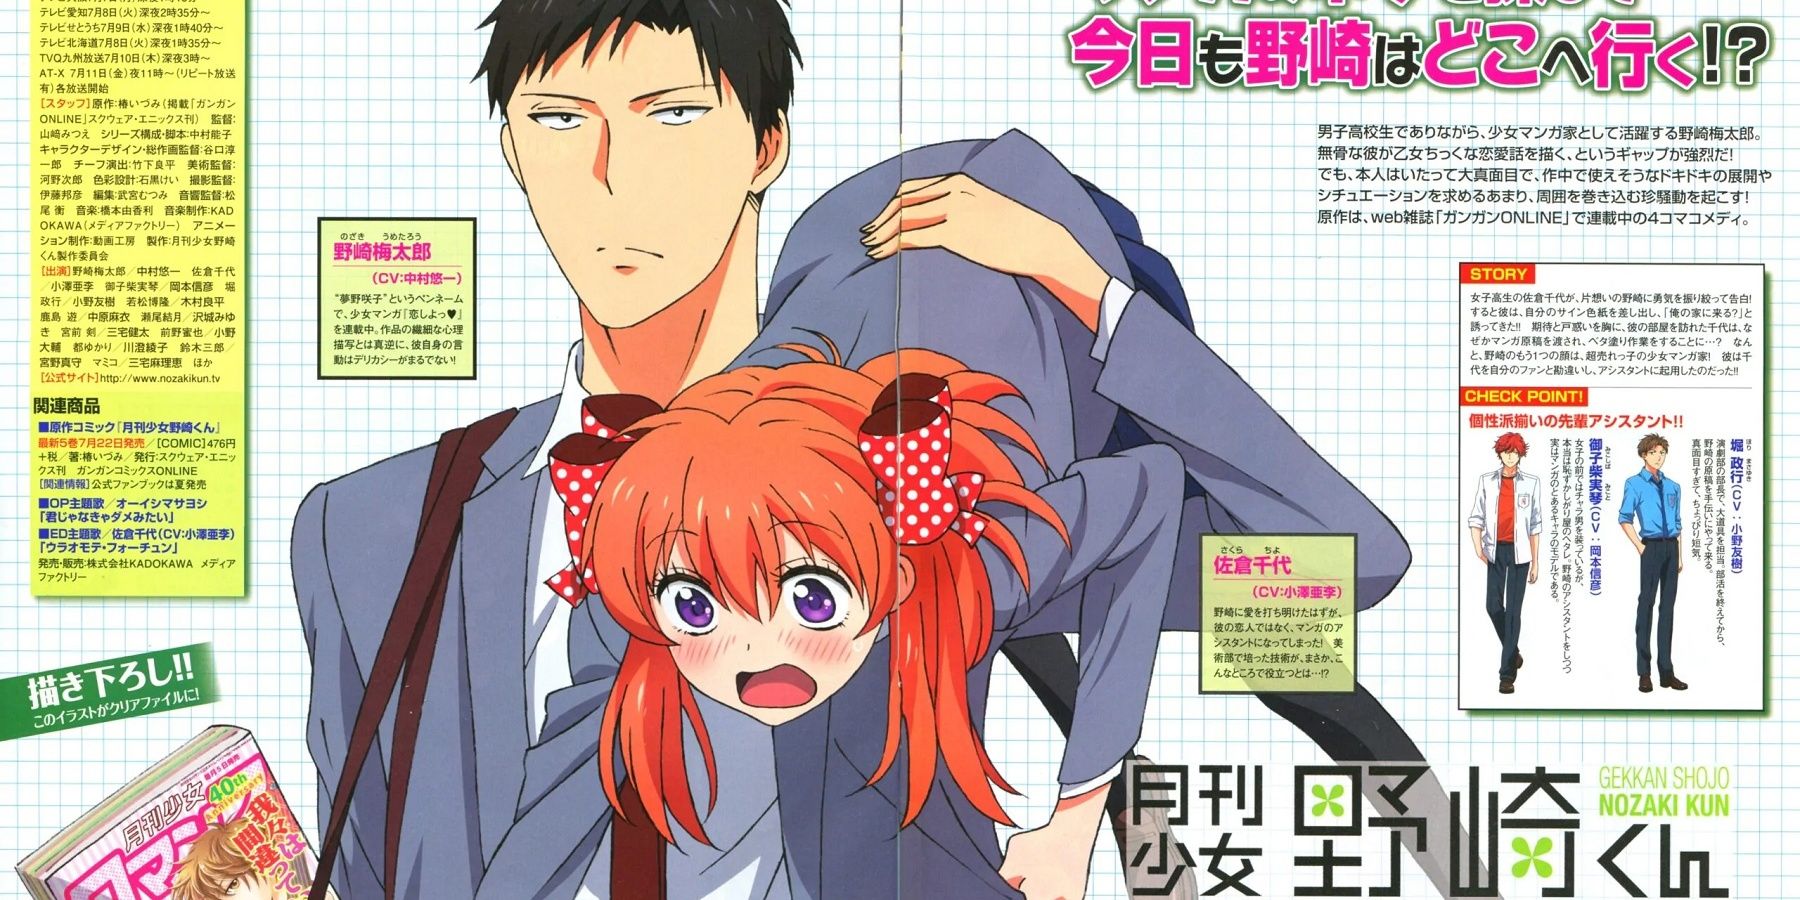 Flawed Romance Manga Protagonists- Monthly Girls' Nozaki-kun